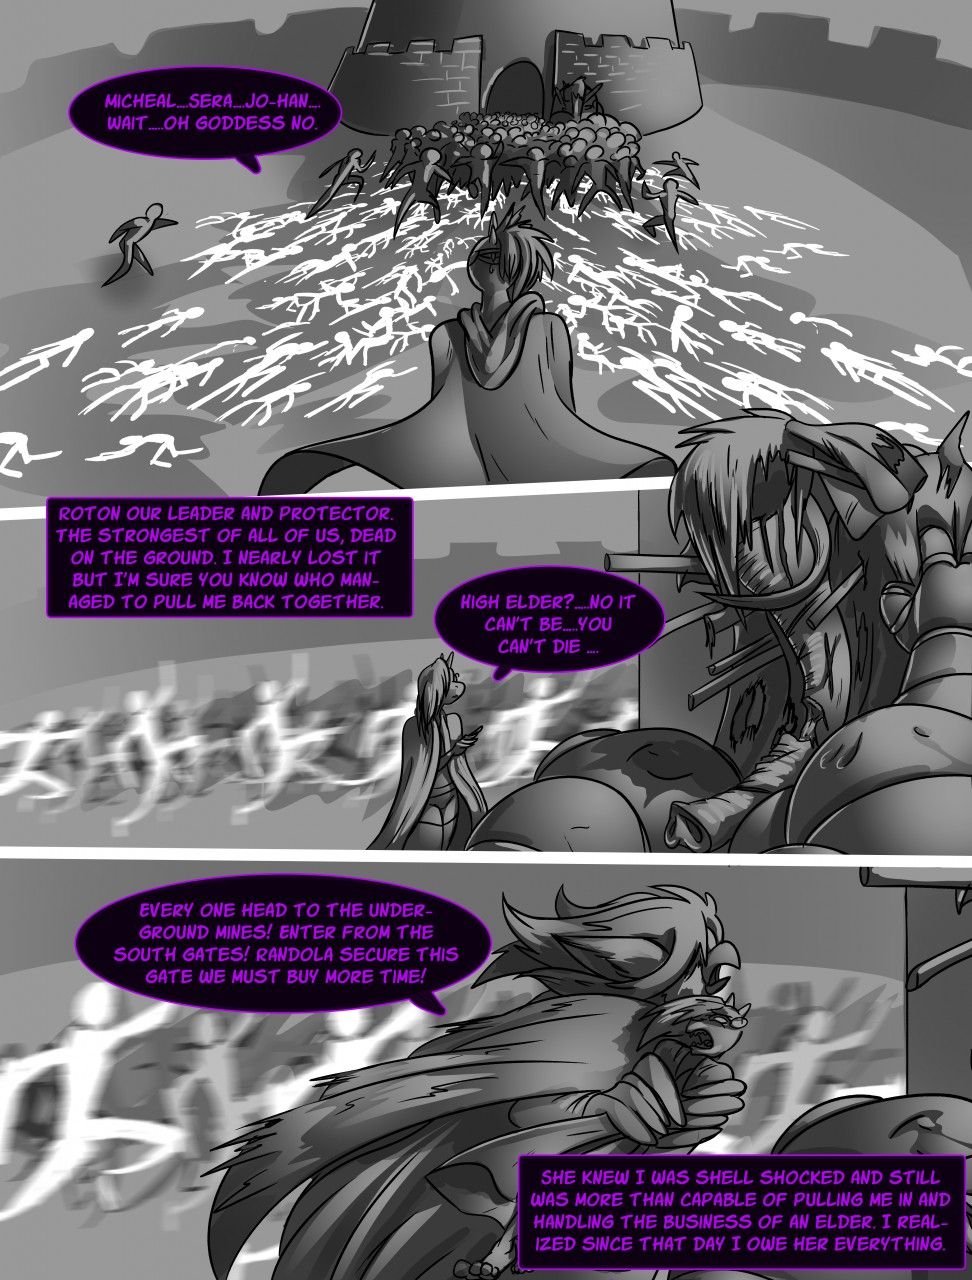 [TheBigBadWolf] Firedrive24 Comic: Rise of the Dark Goddess CH:1-3 (Ongoing) 15